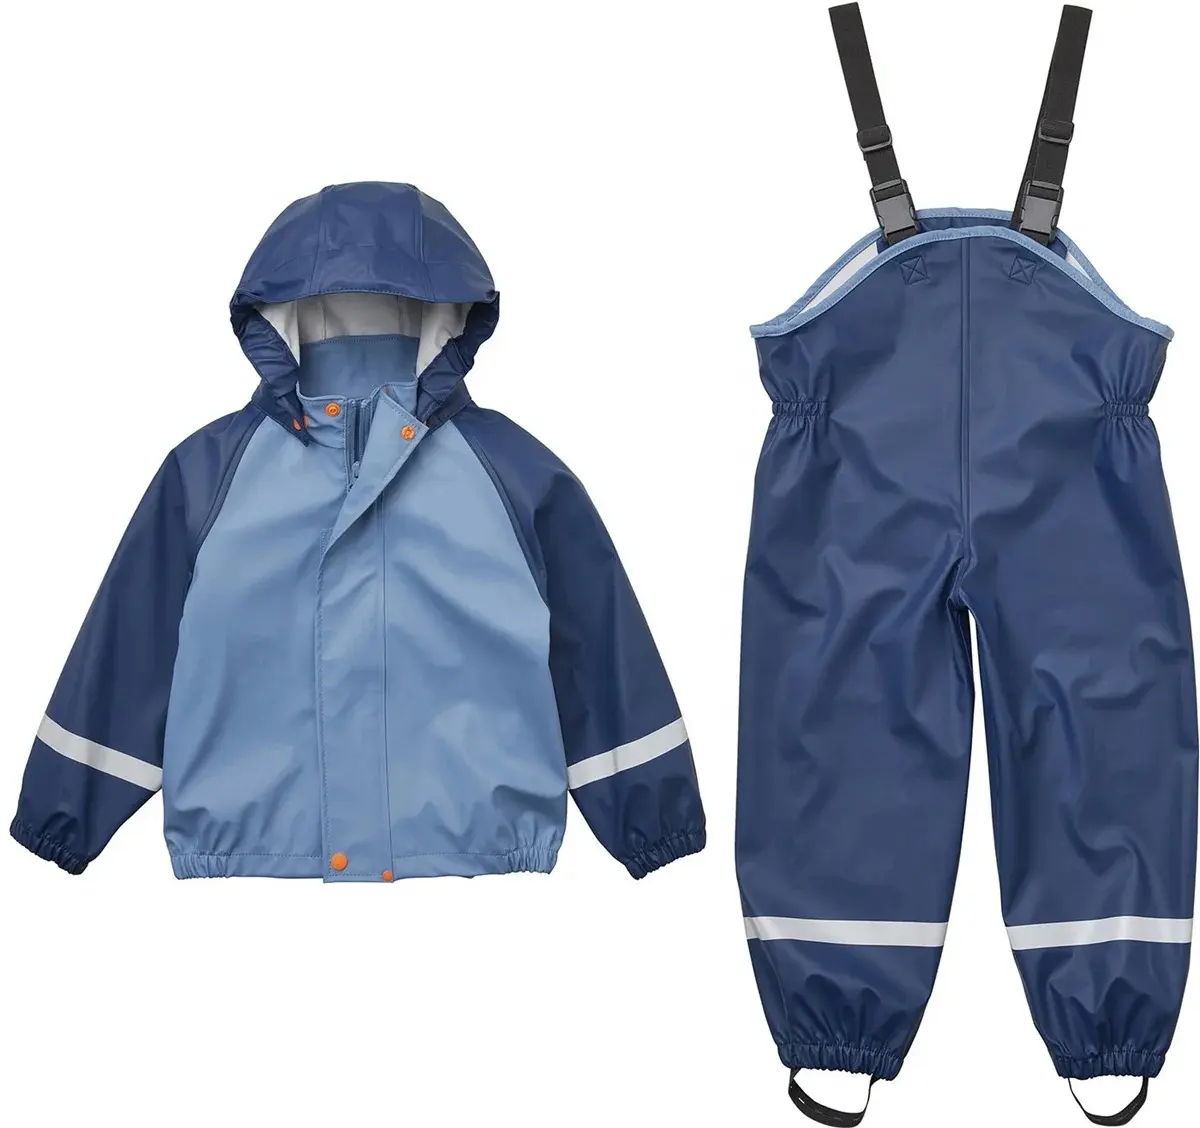 Kids Outdoor Rain Gear Navy Pattern PU Waterproof Hooded Jacket With Suspender Bib Pants Sports Outfit